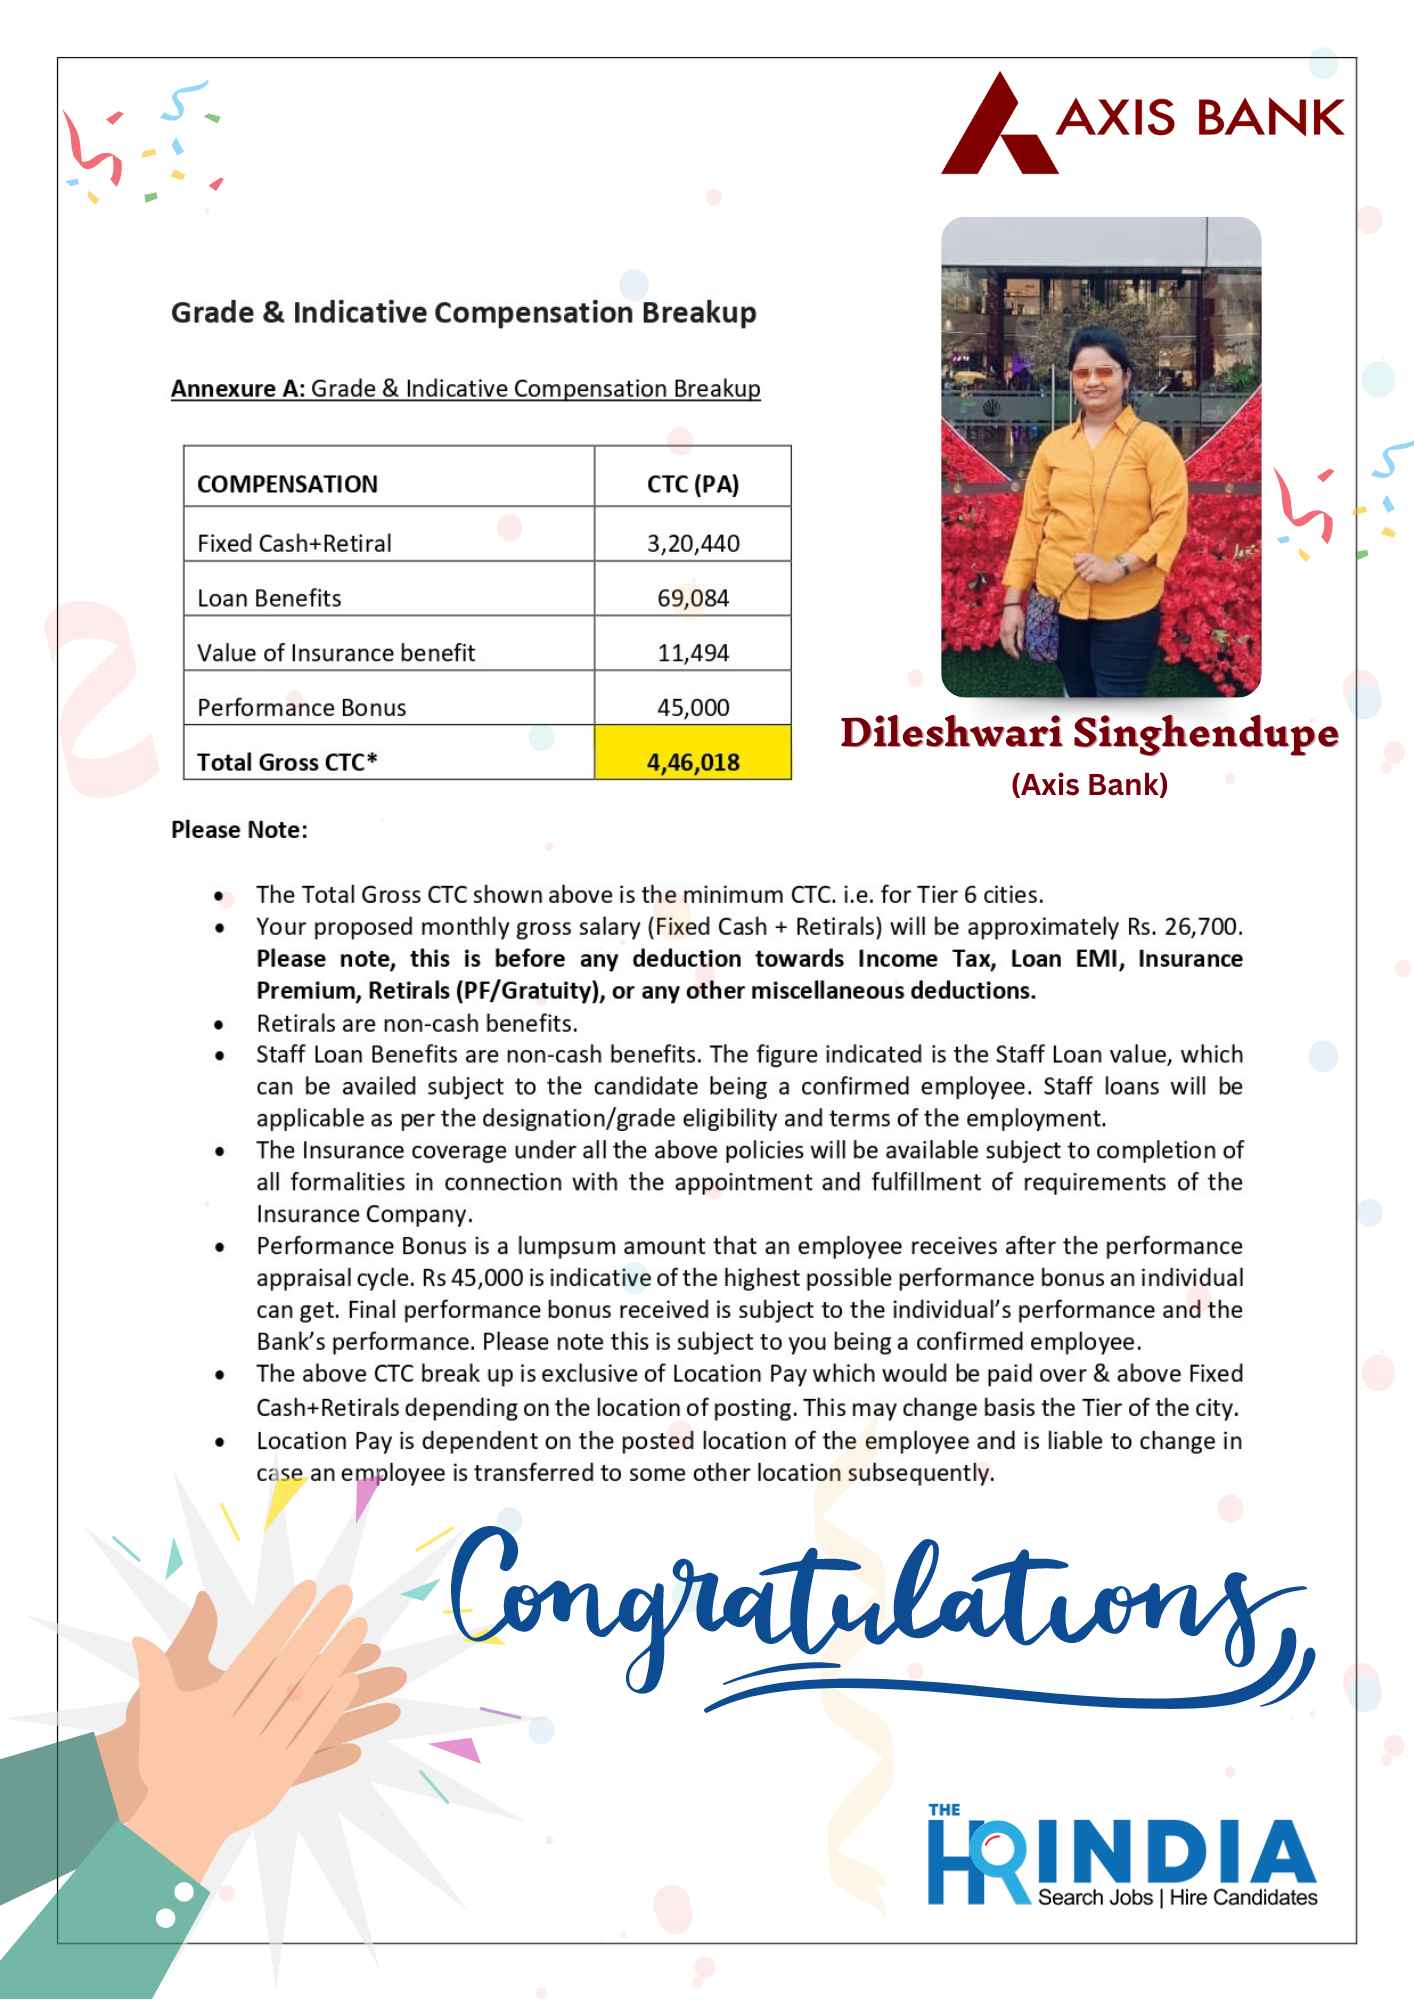 Dileshwari Singhendupe (1)  | The HR India